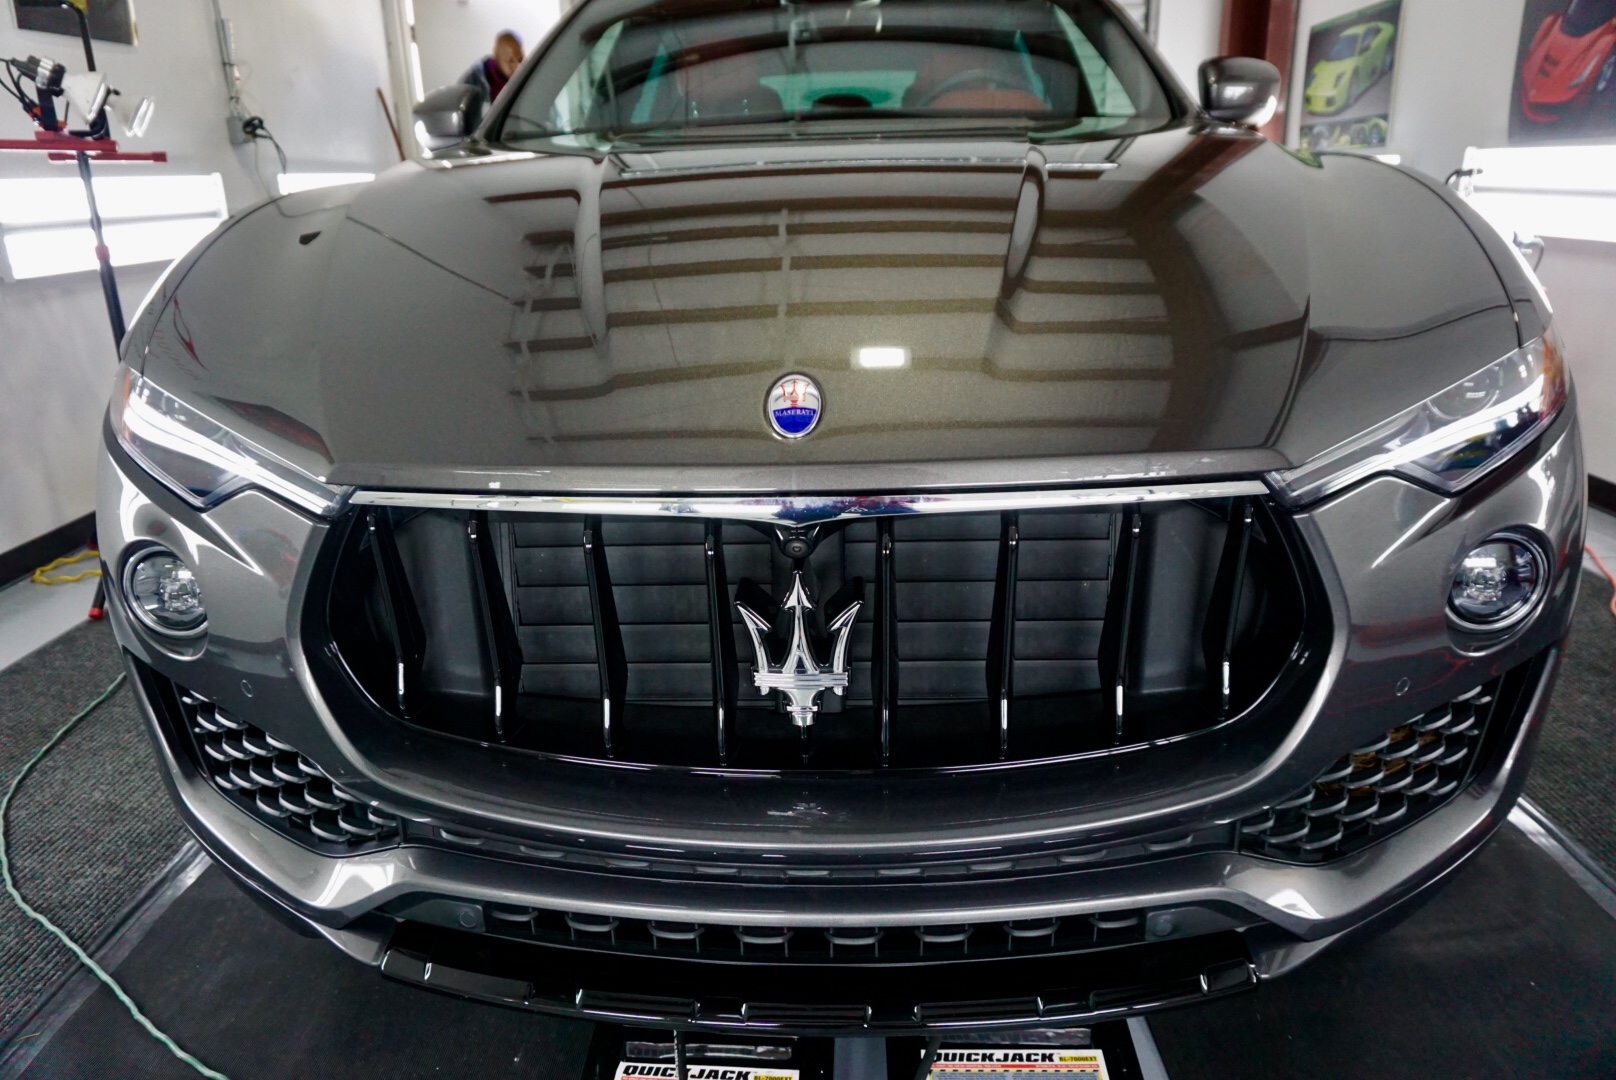 Premier Wash & Restoration of 2018 Maserati Levante